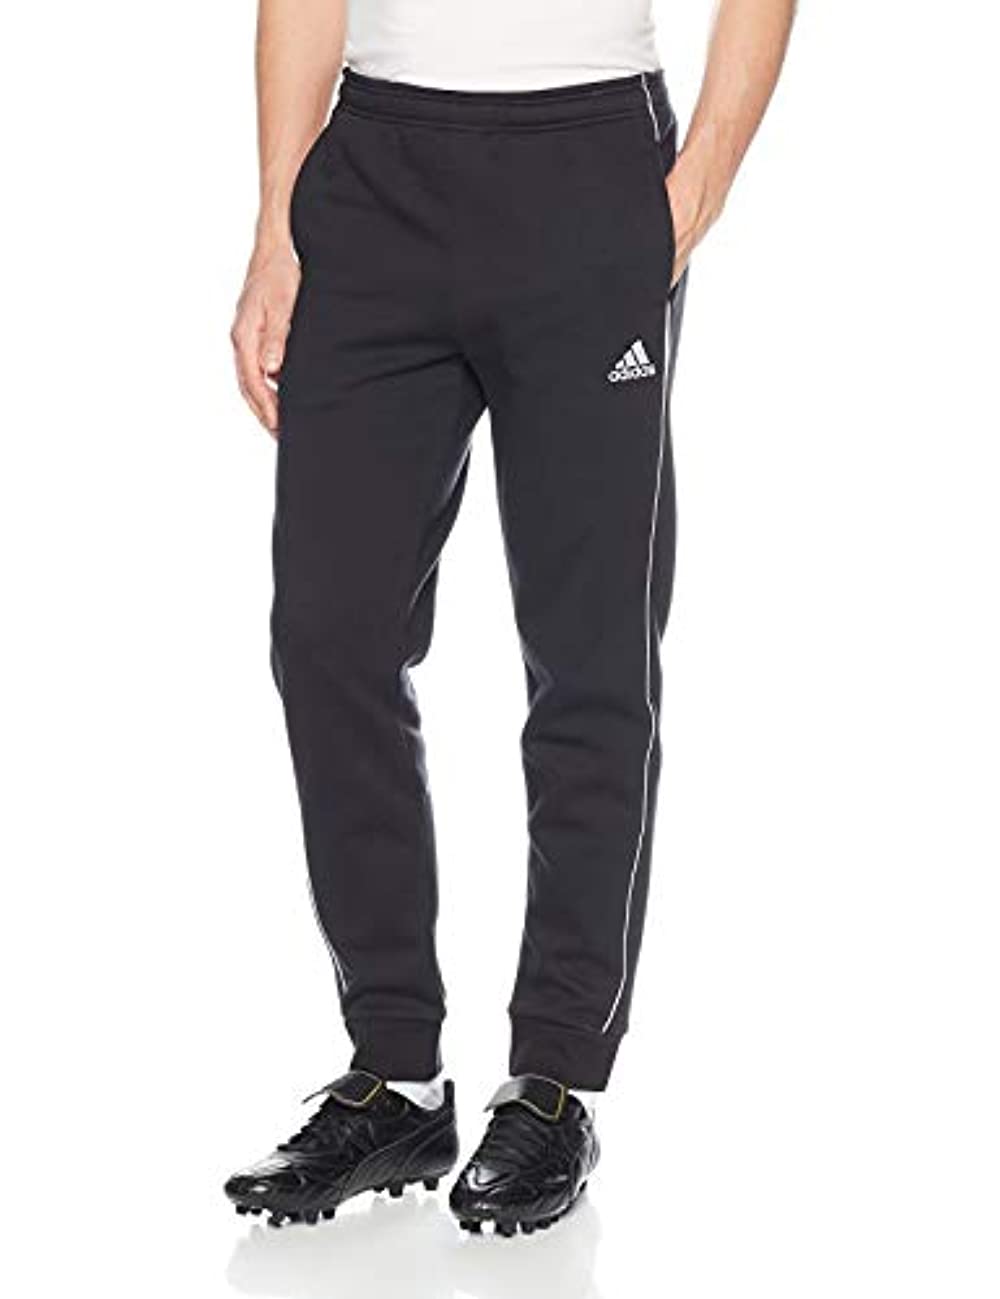 adidas mens Core 18 AEROREADY Slim Fit Full Length Soccer Training Joggers Sweatpants Black White 2XL - image 1 of 2